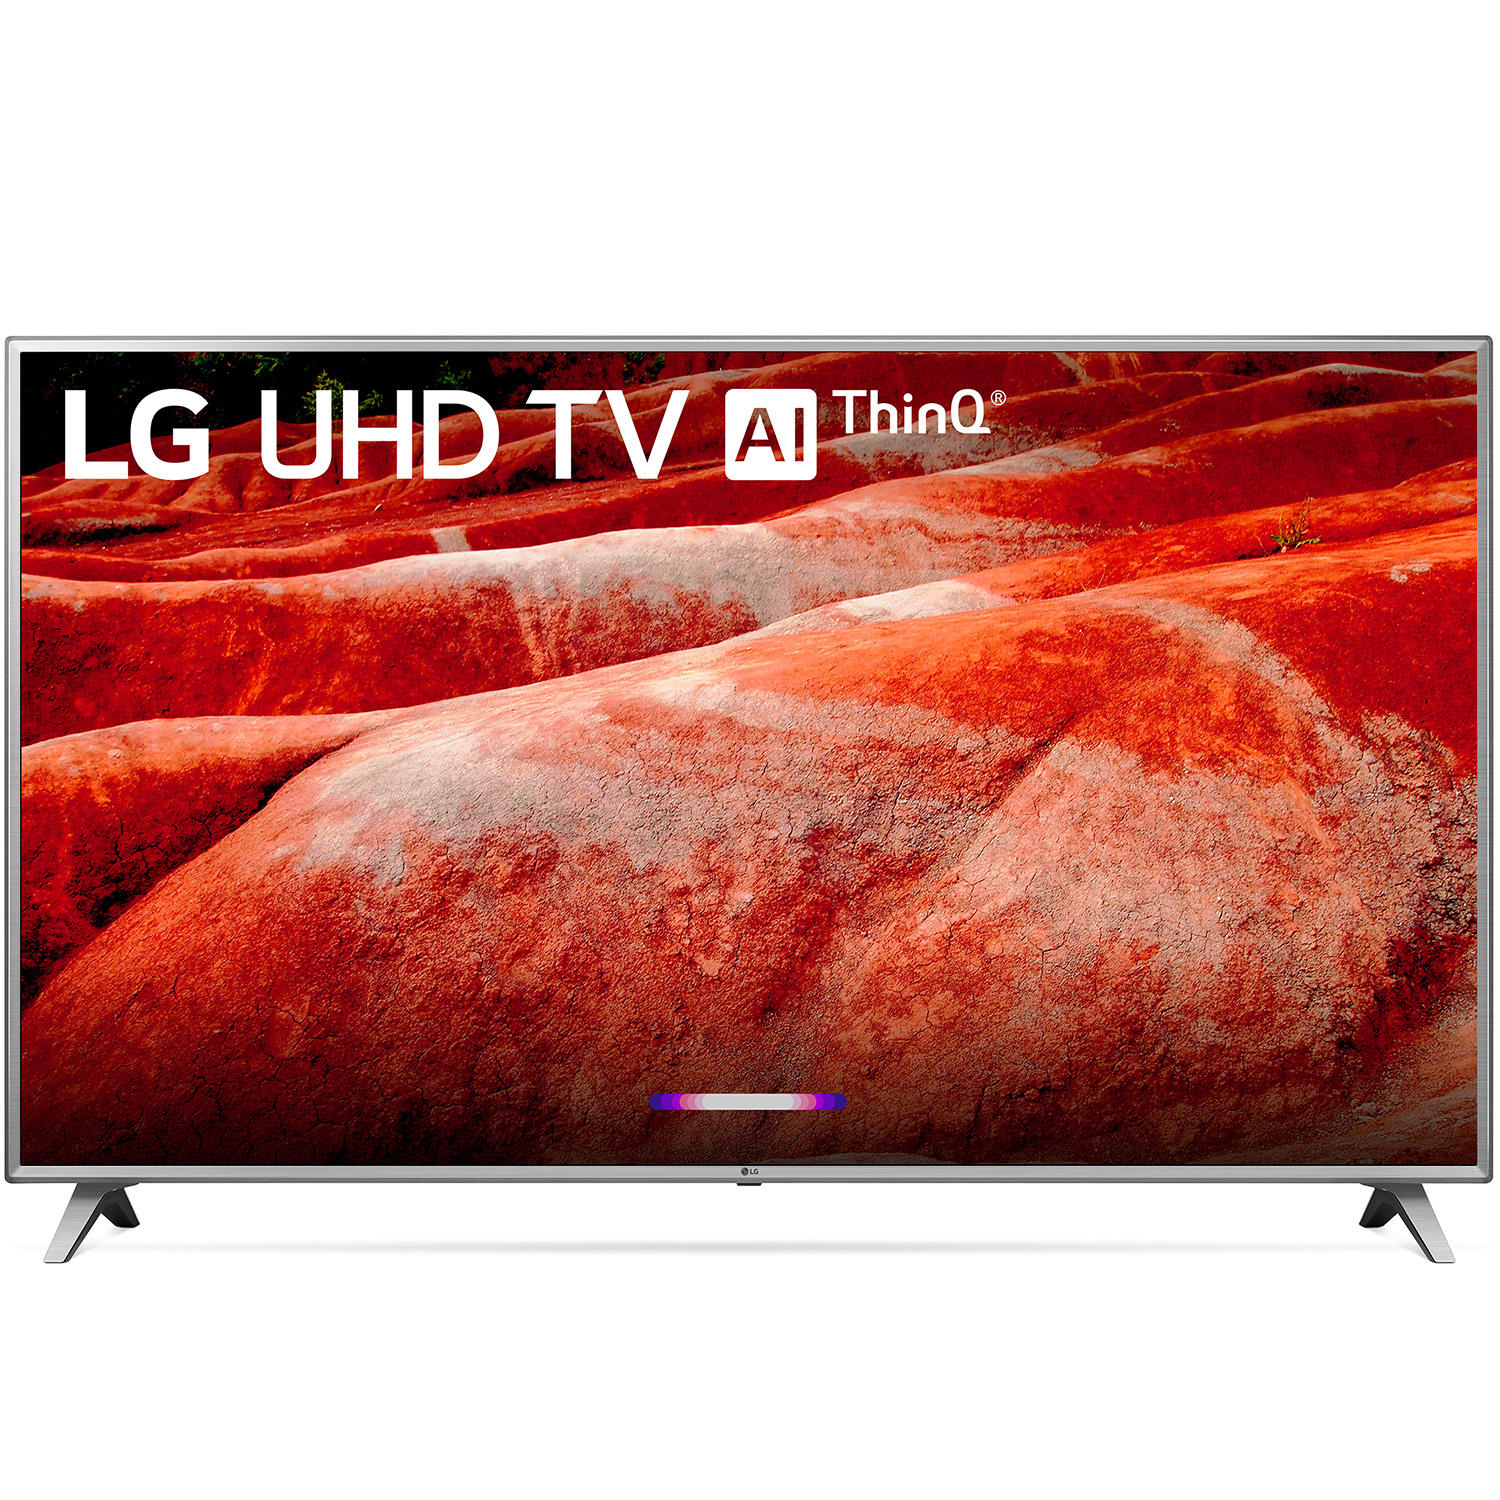 LG 86UM8070AUB 86″ 4K Ultra HD Smart HDR TV with AI ThinQ